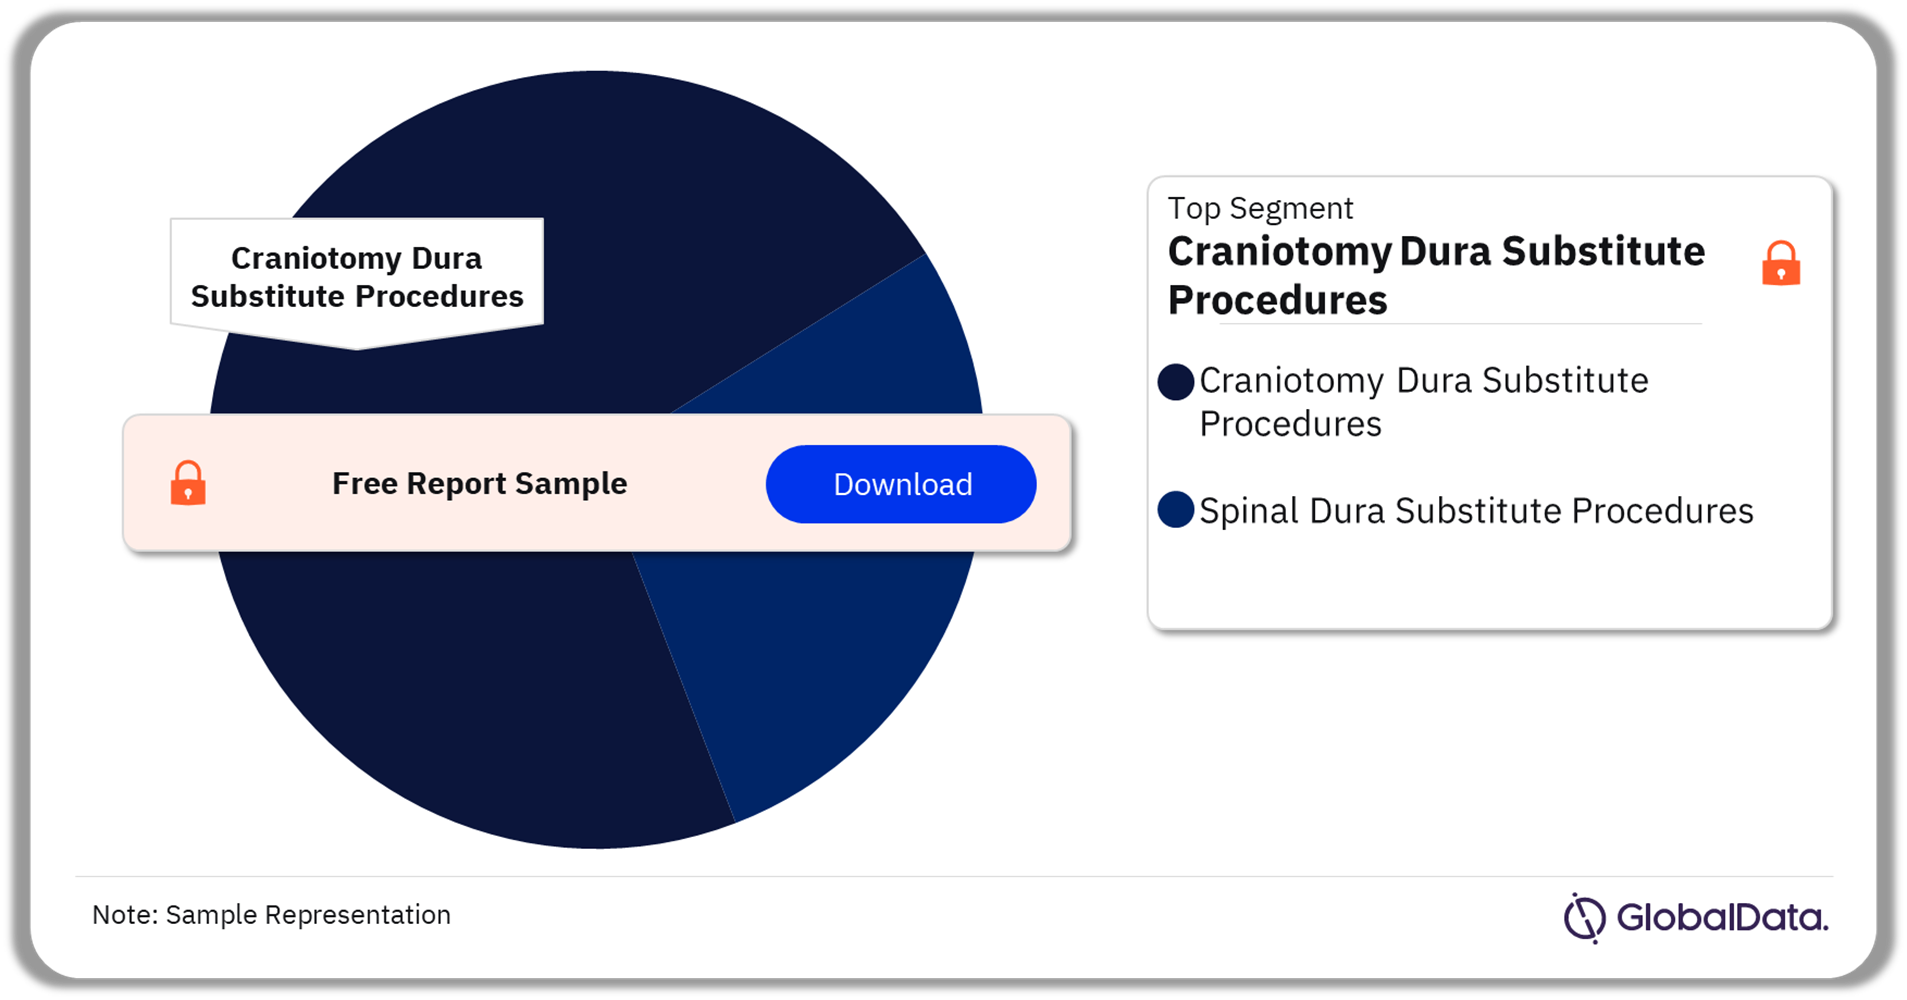 Germany Craniotomy Dura Substitute Procedures Market Analysis by Segments, 2022 (%)